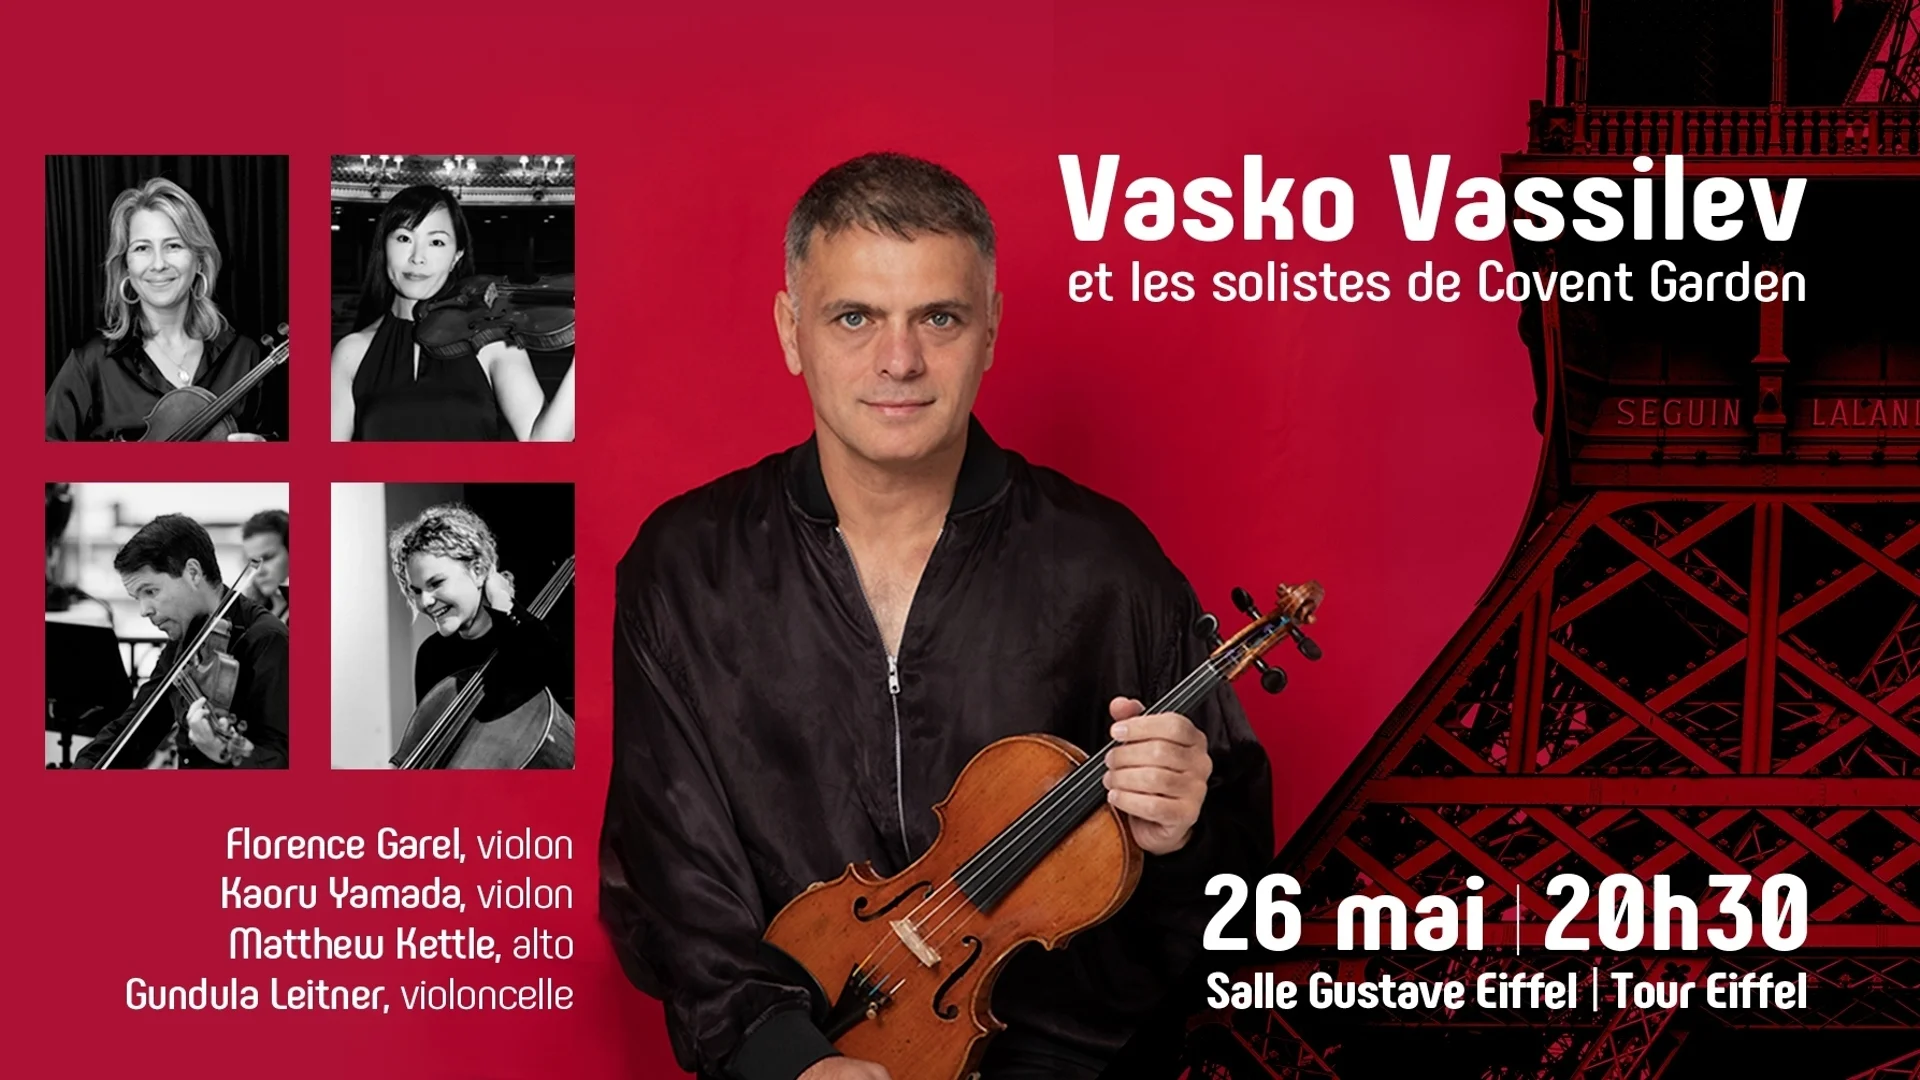 Васко Василев с концерт на Айфеловата кула по случай 24 май